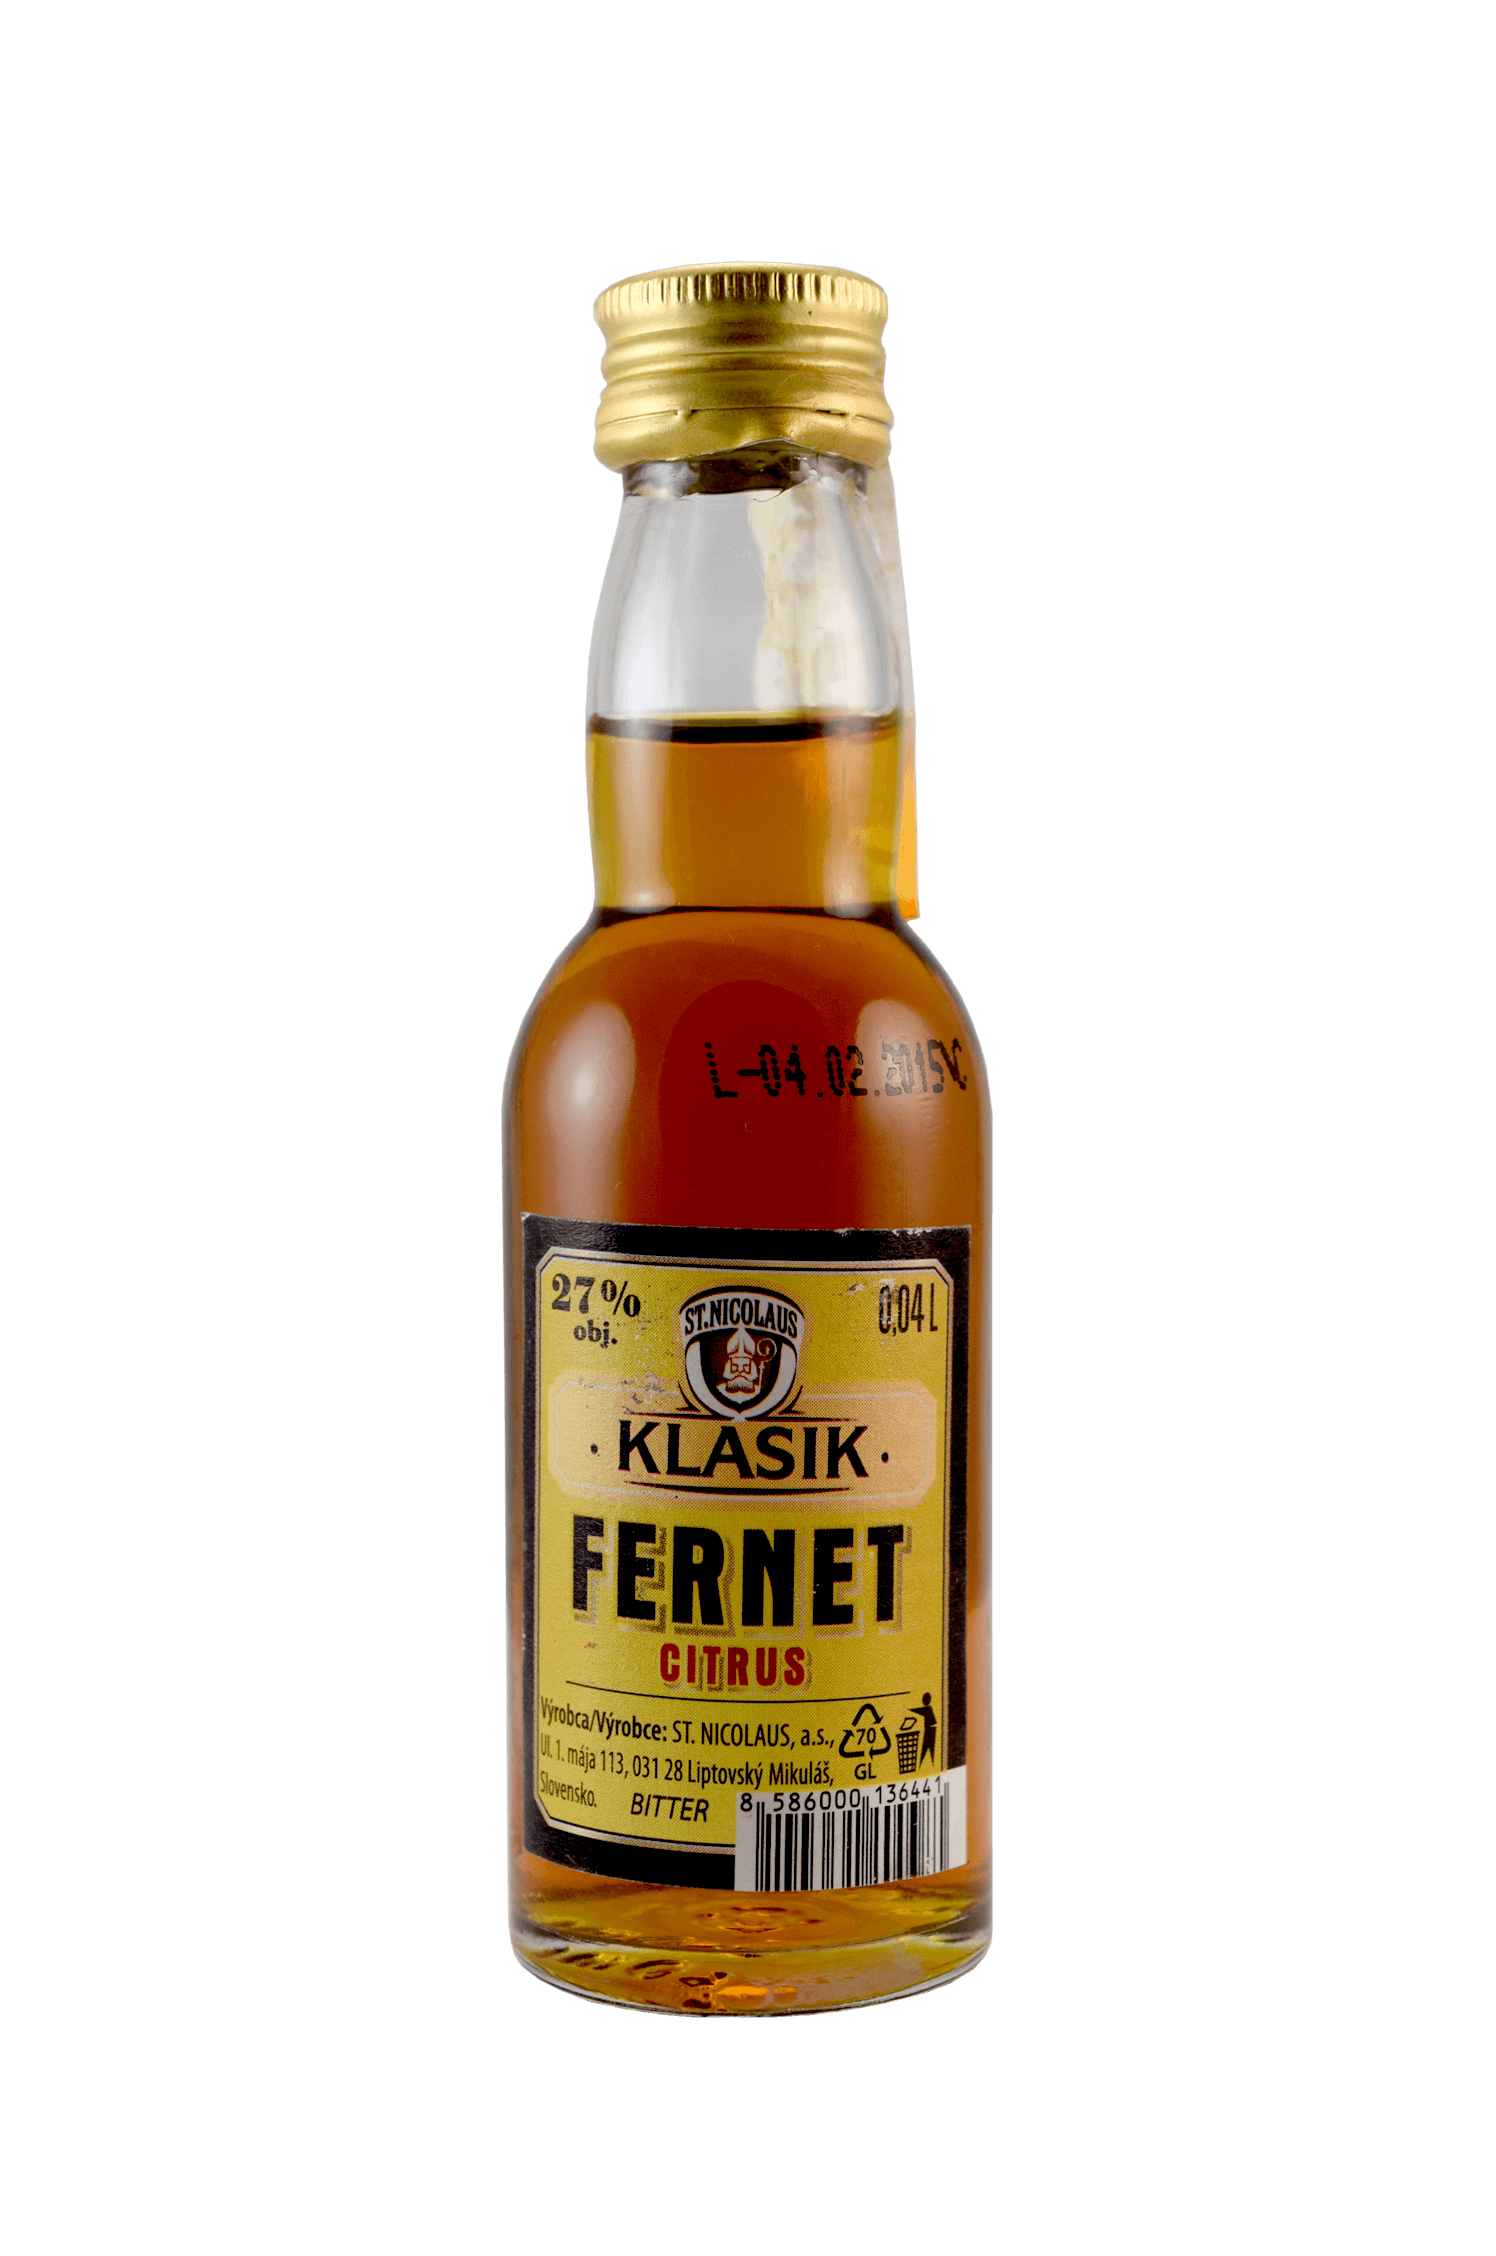 Fernet Citrus Klasik